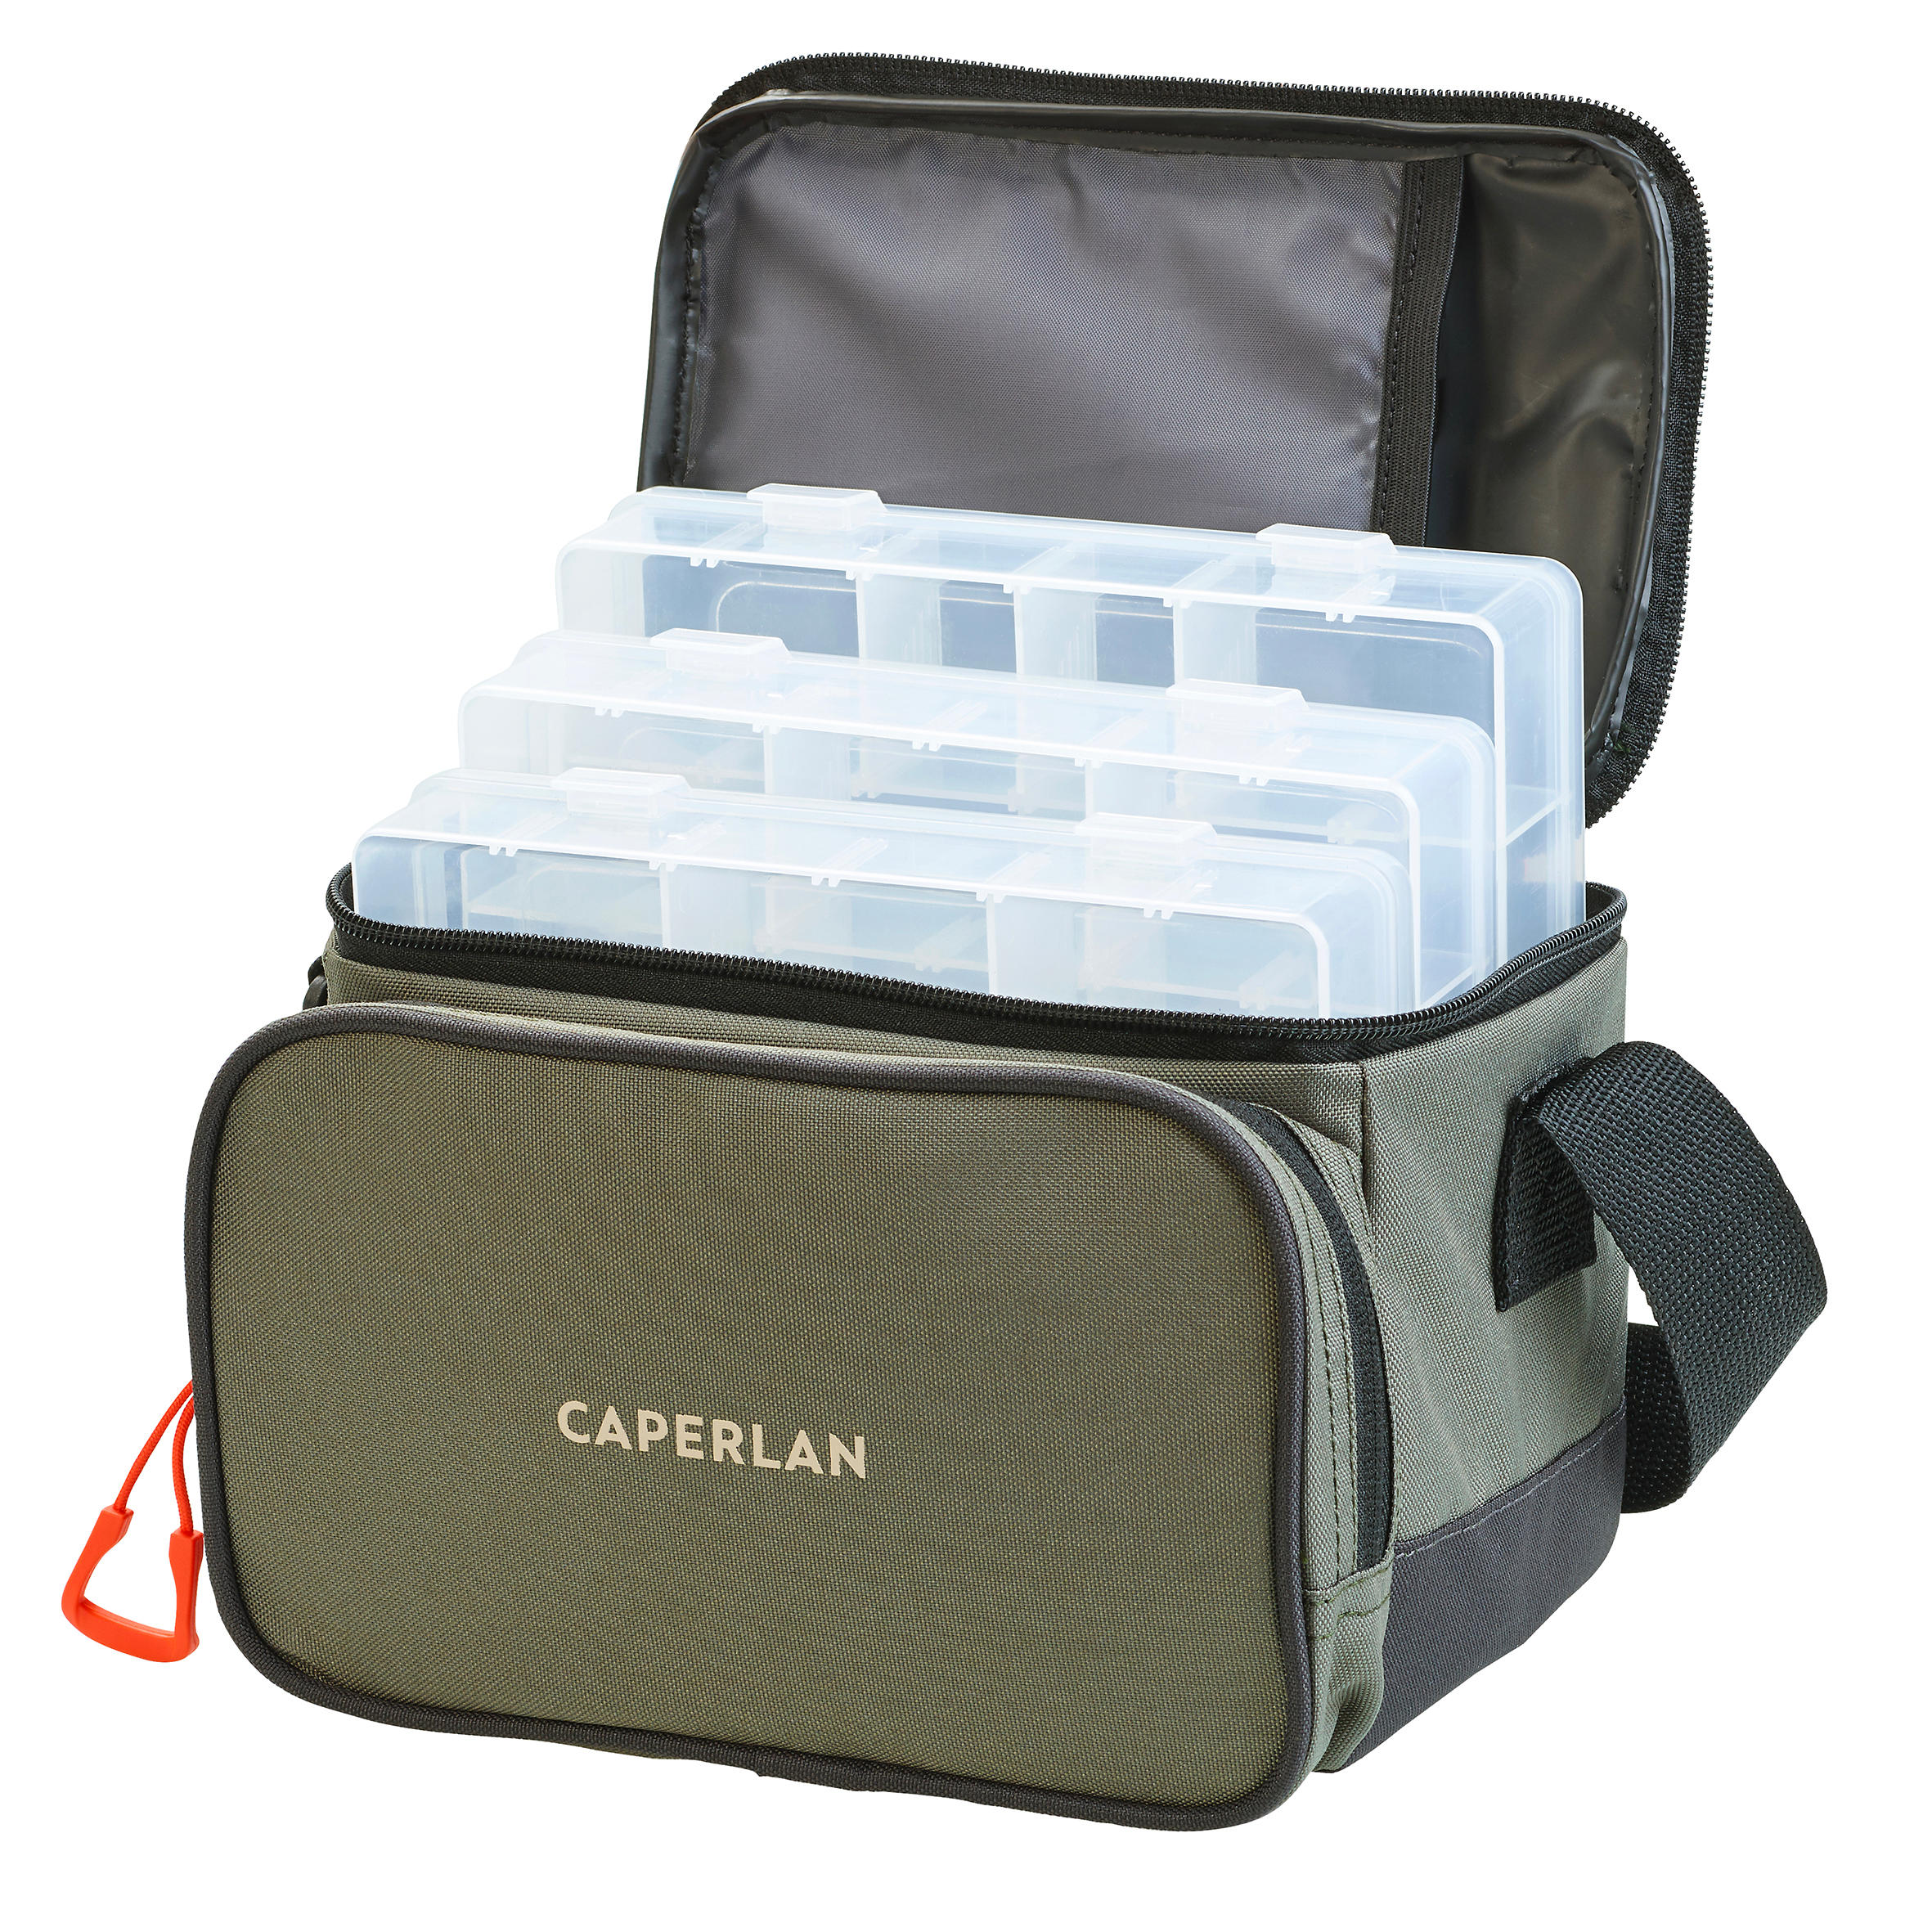 Caperlan Carp Holdall-5 3 Rod Fishing Sleeve 10